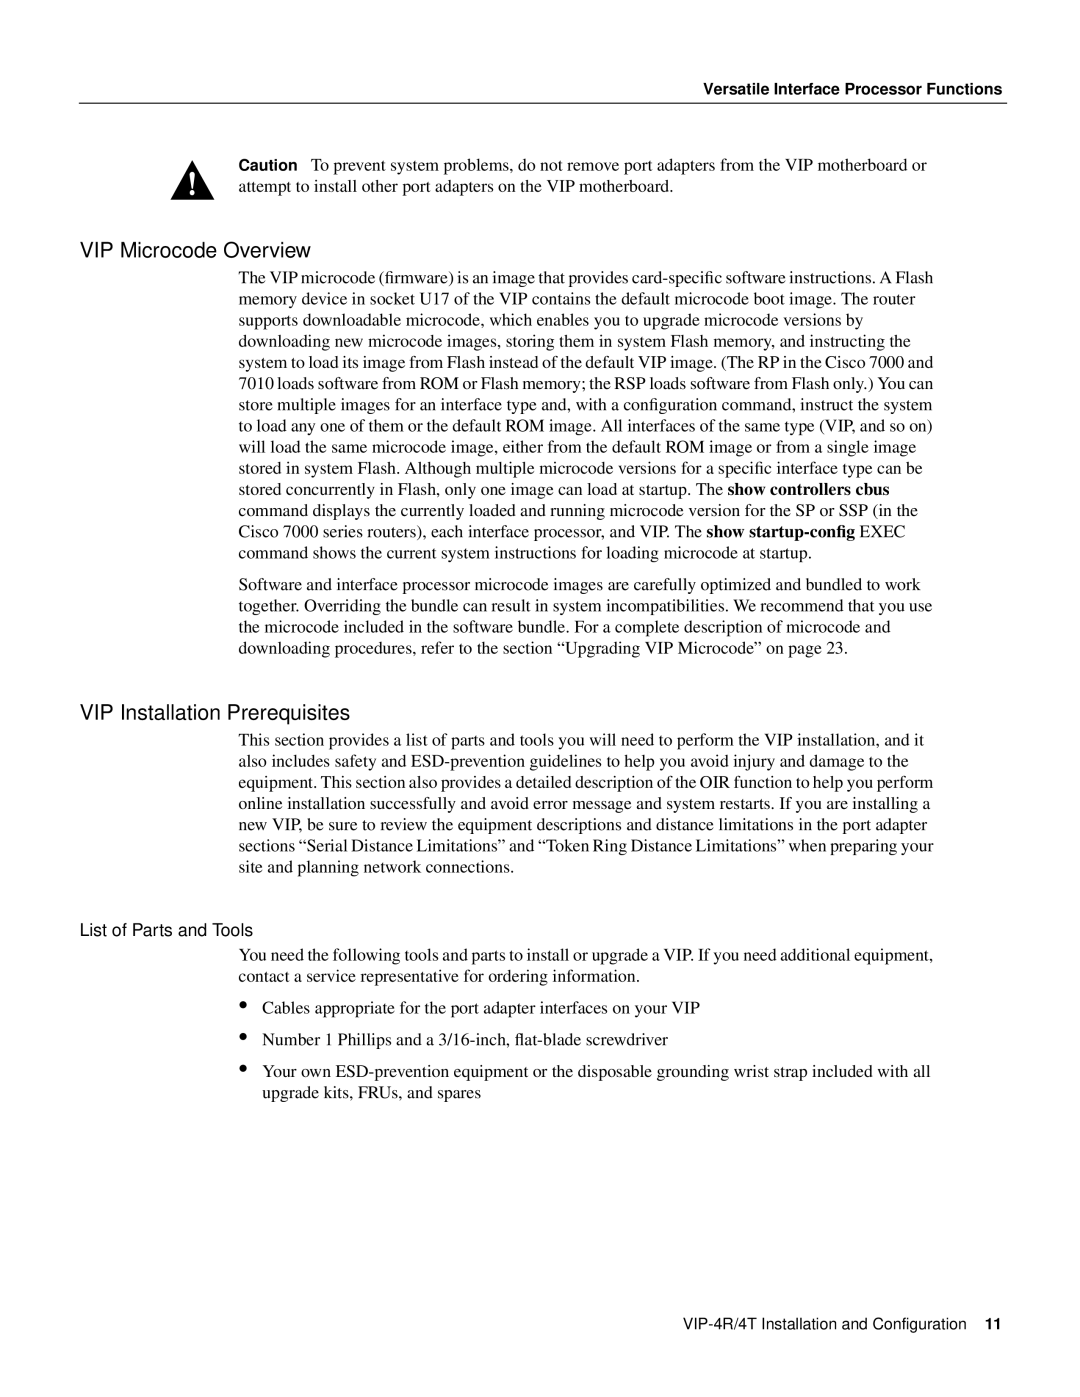 Cisco Systems VIP-4R/4T manual VIP Microcode Overview, VIP Installation Prerequisites 